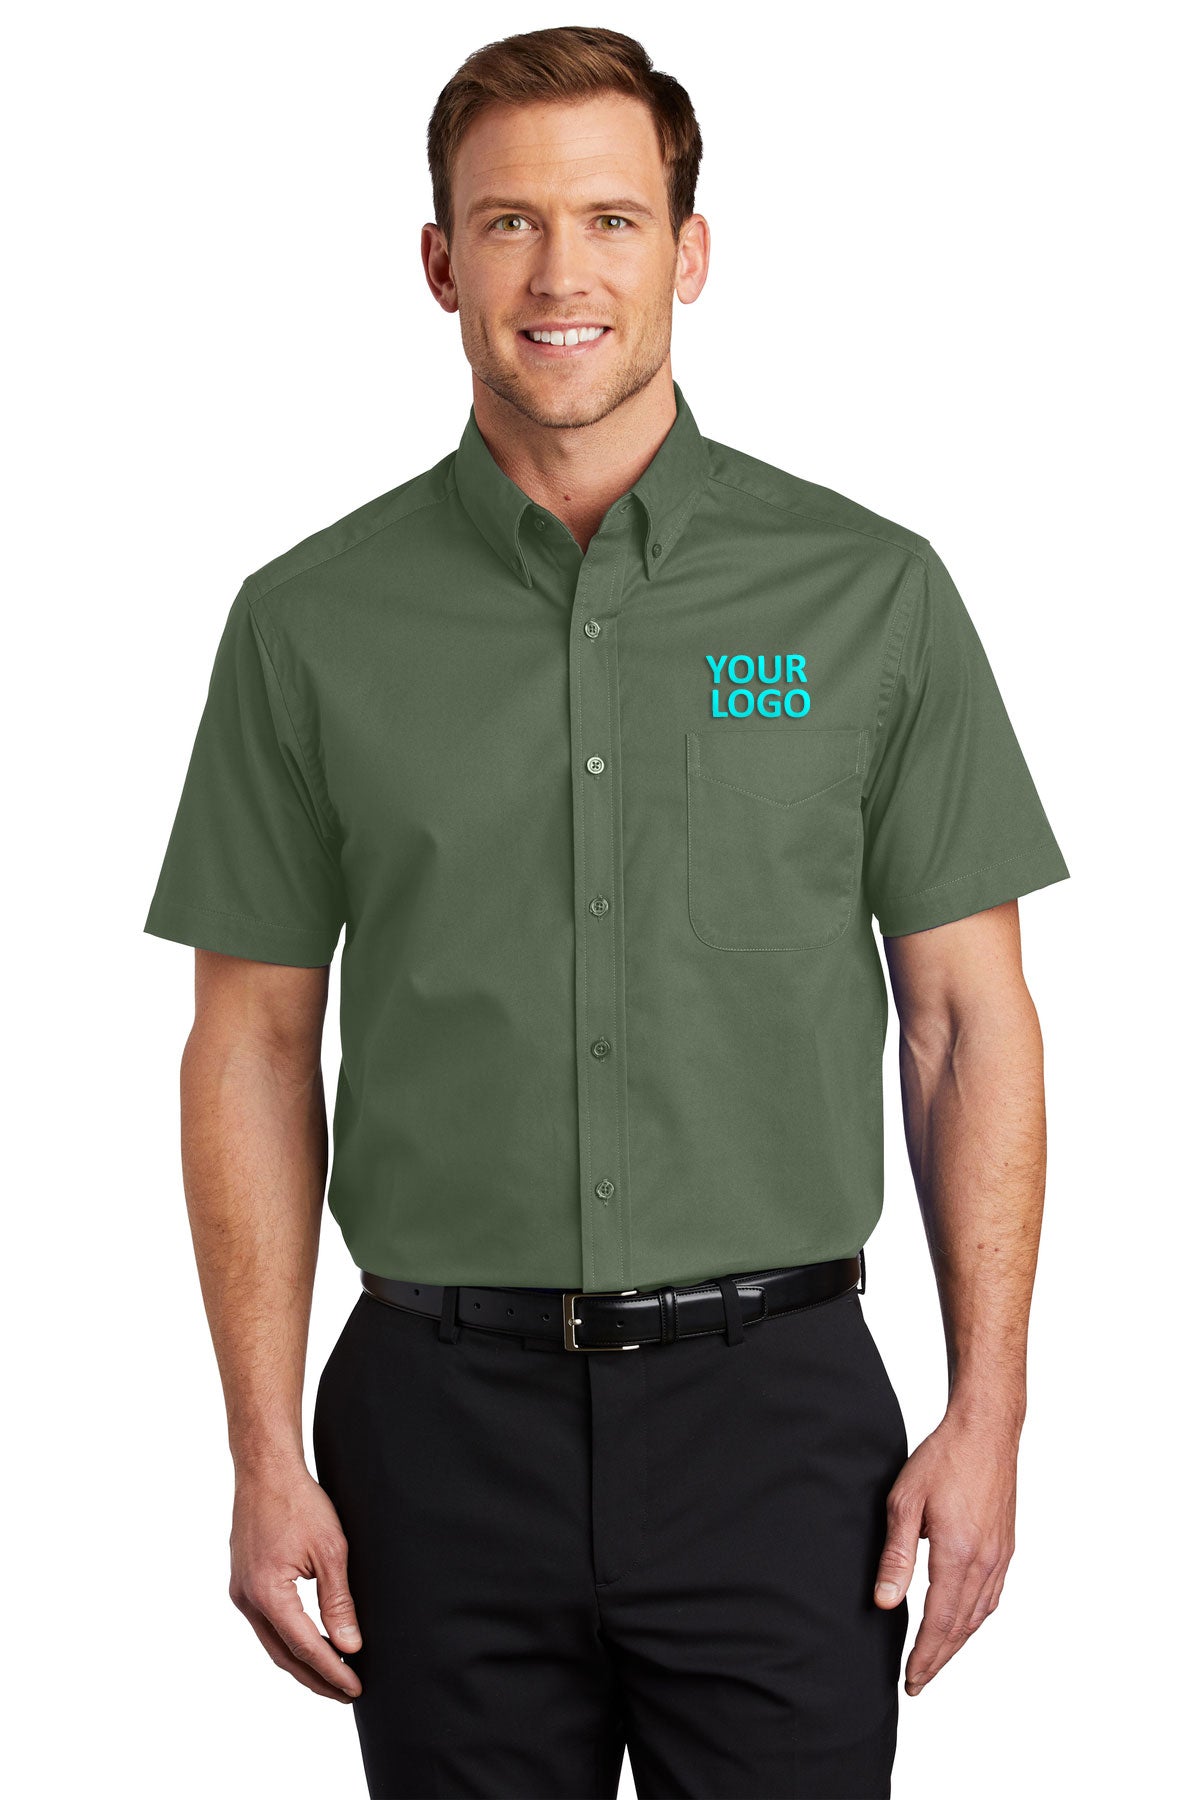 Port Authority Clover Green S508 custom logo shirts